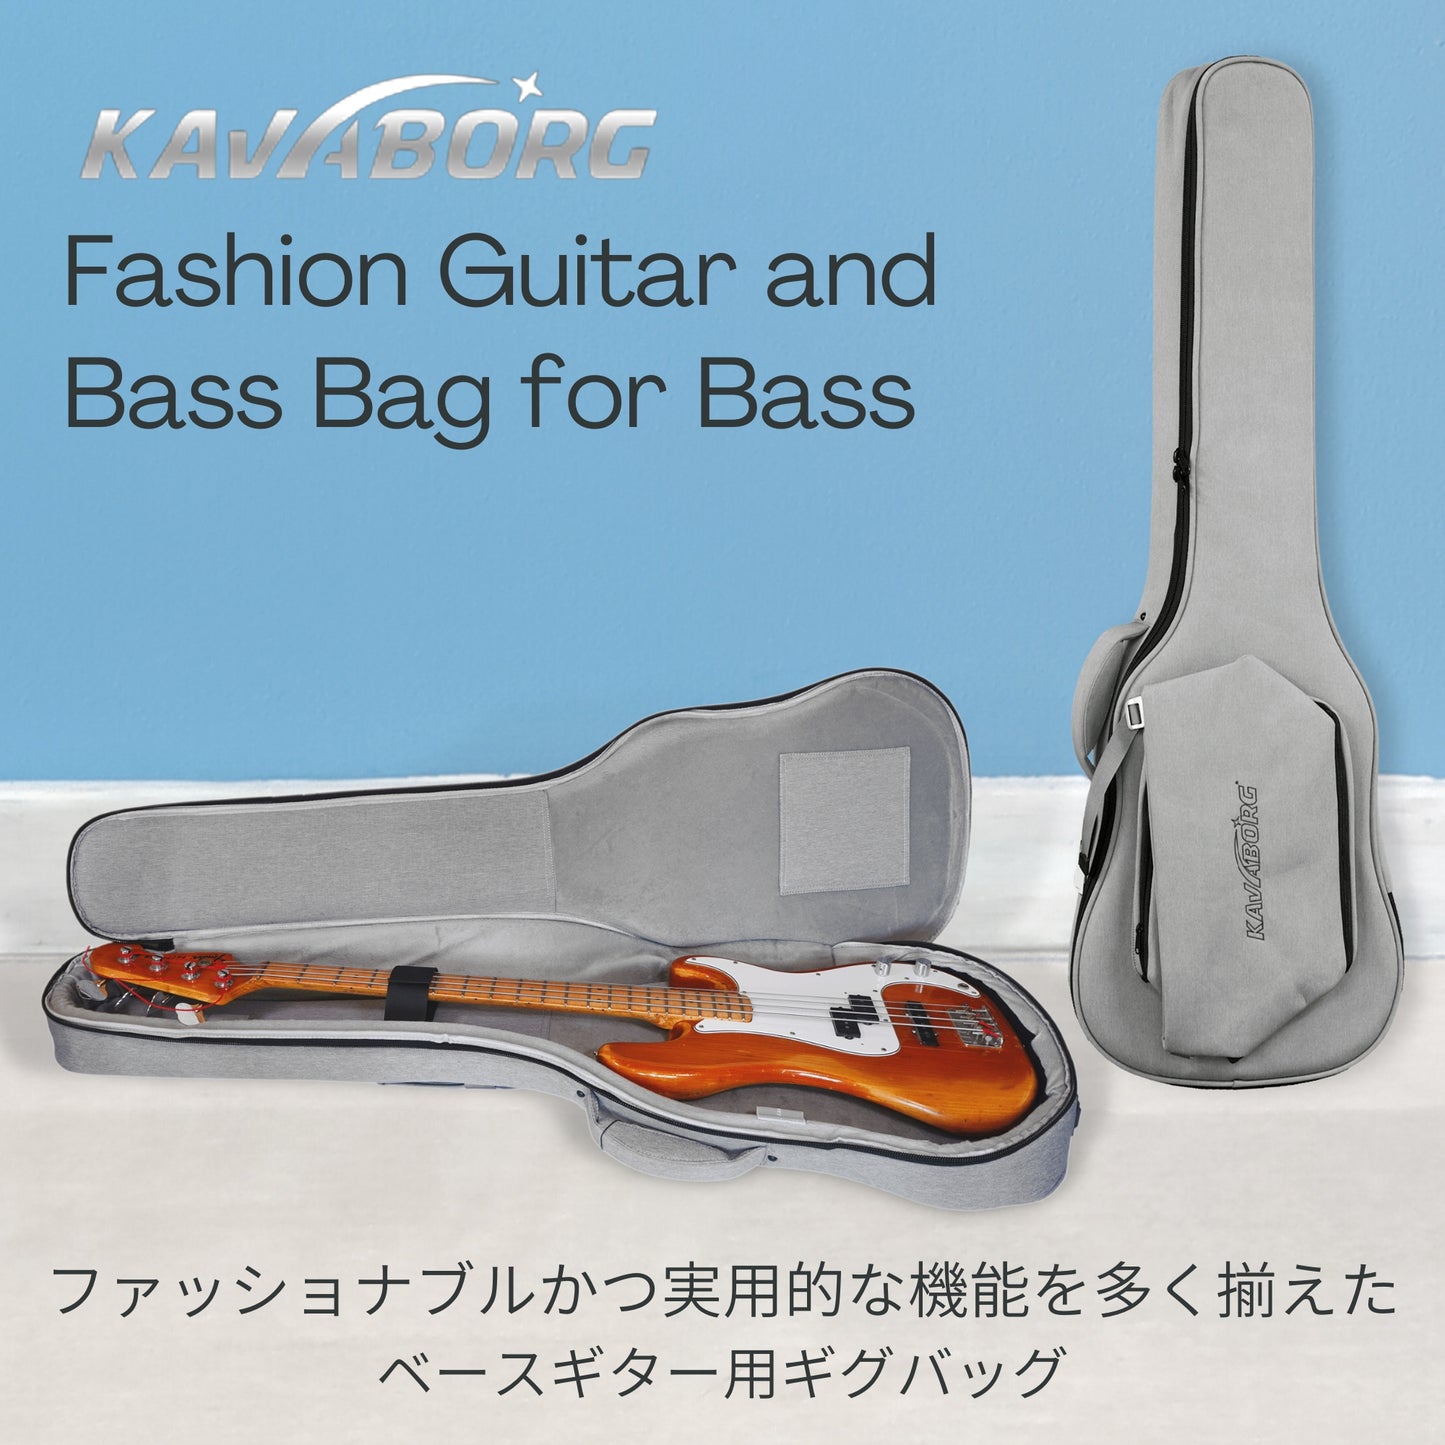 Kavaborg/Fashion Guitar and Bass Bag for Bass  ベース用